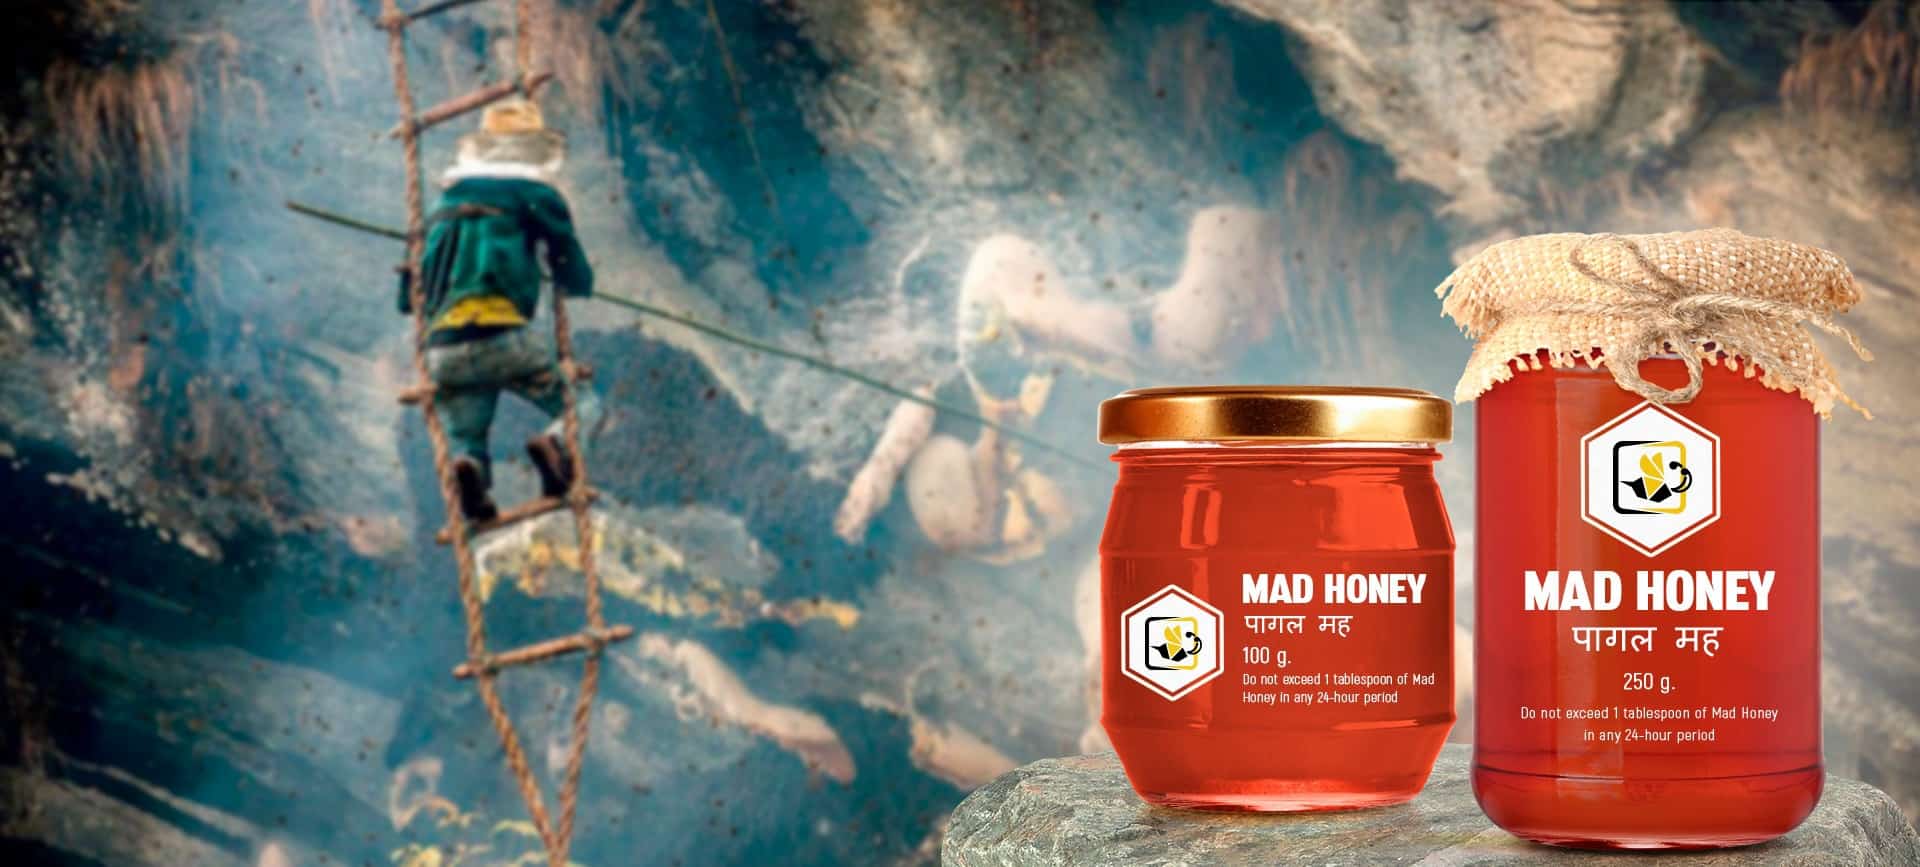 Buying Mad Honey